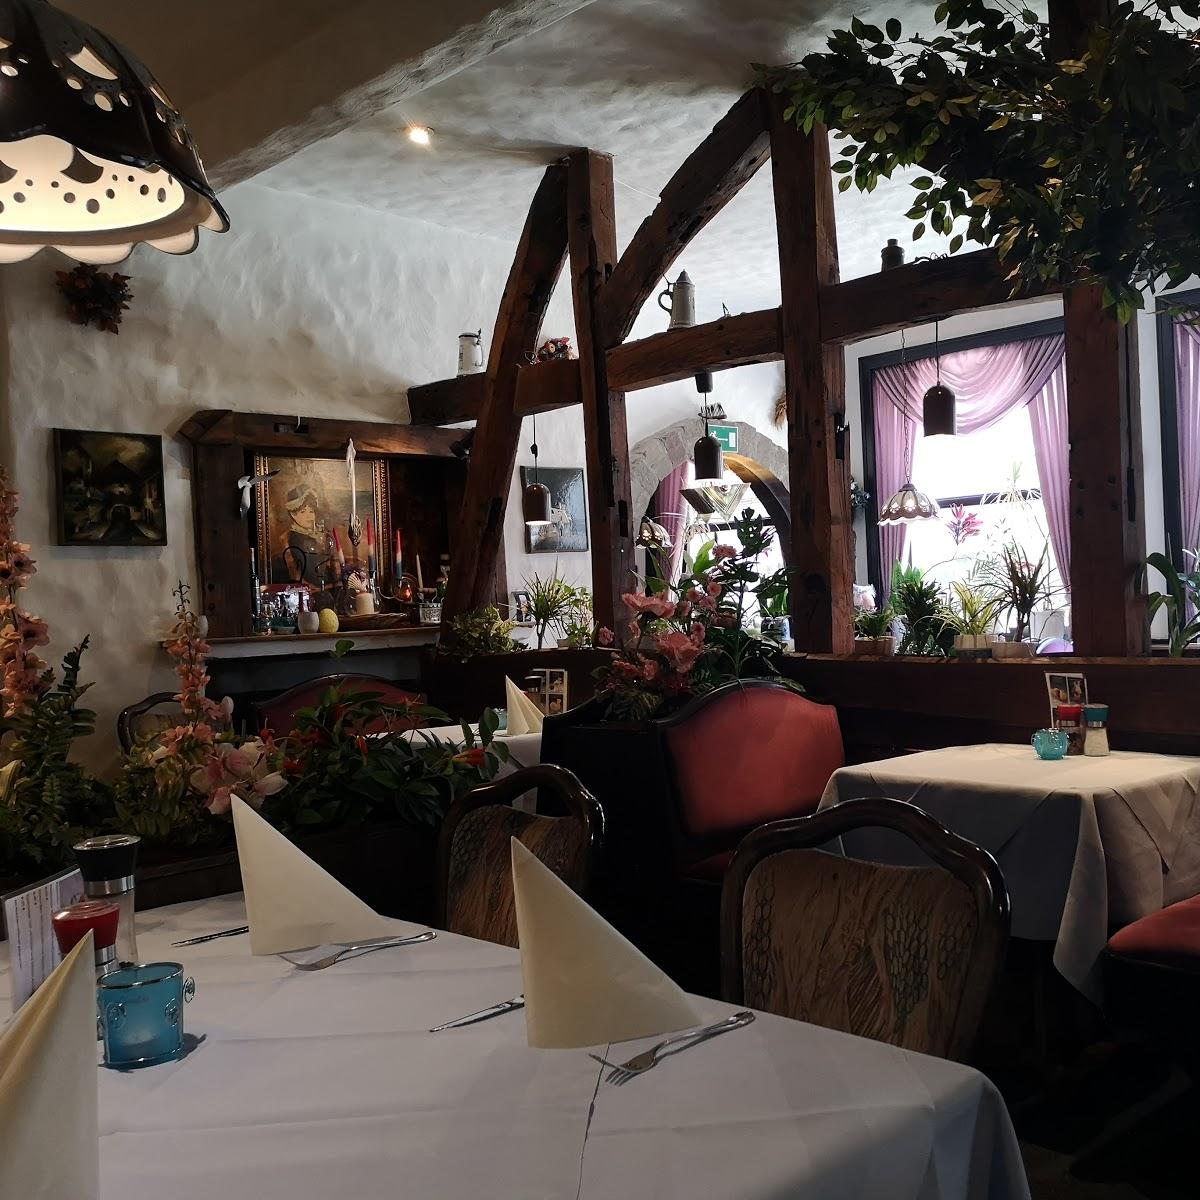 Restaurant "Balkan-Restaurant" in Wermelskirchen